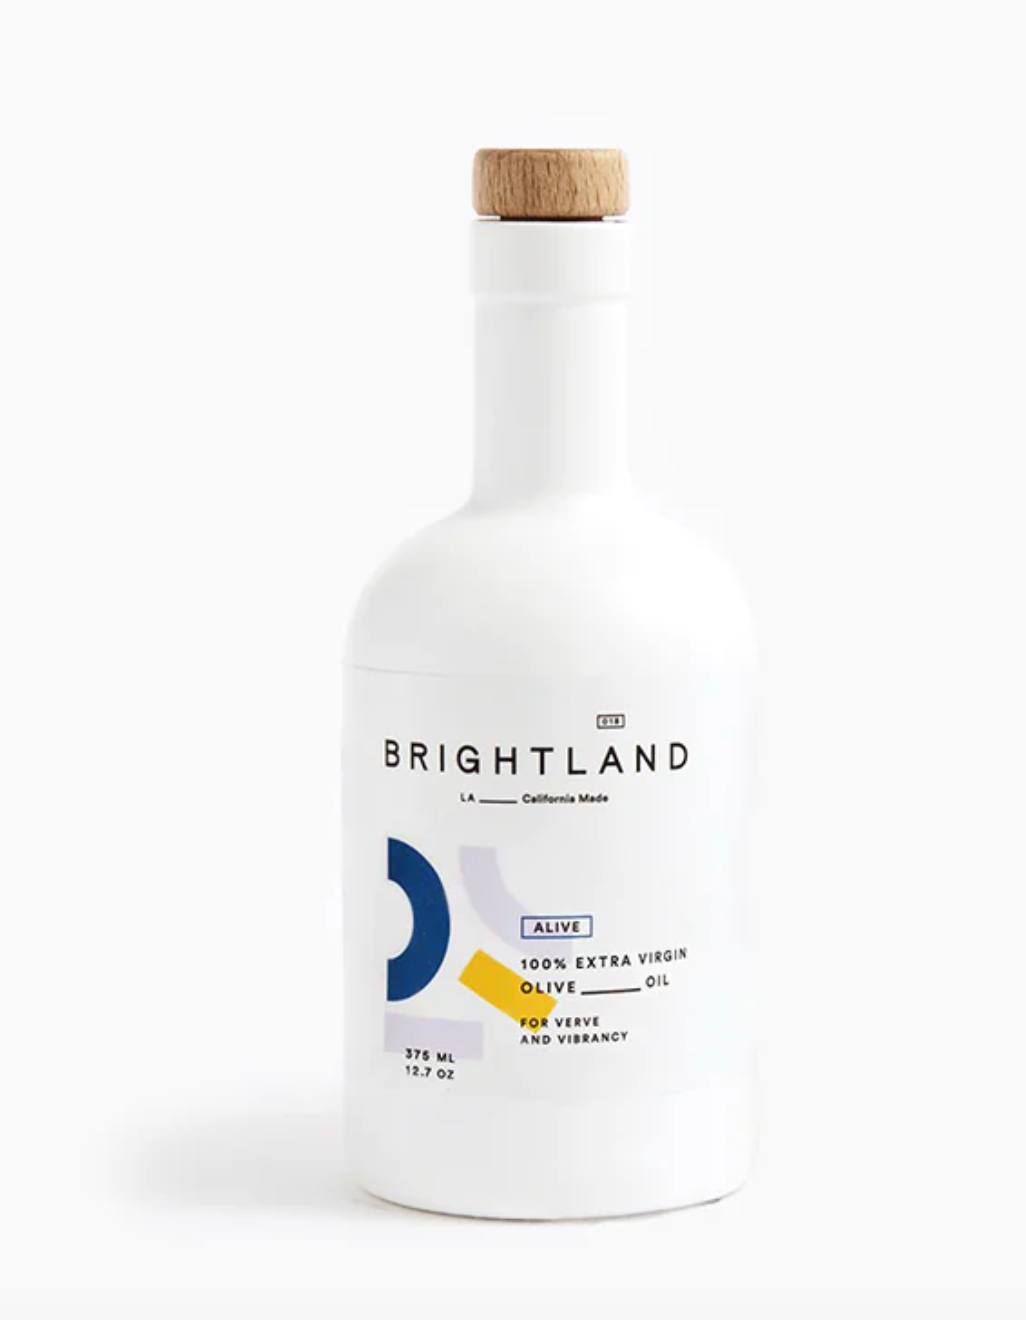 Brightland :: Alive Extra Virgin Olive Oil 12.7 fl oz.